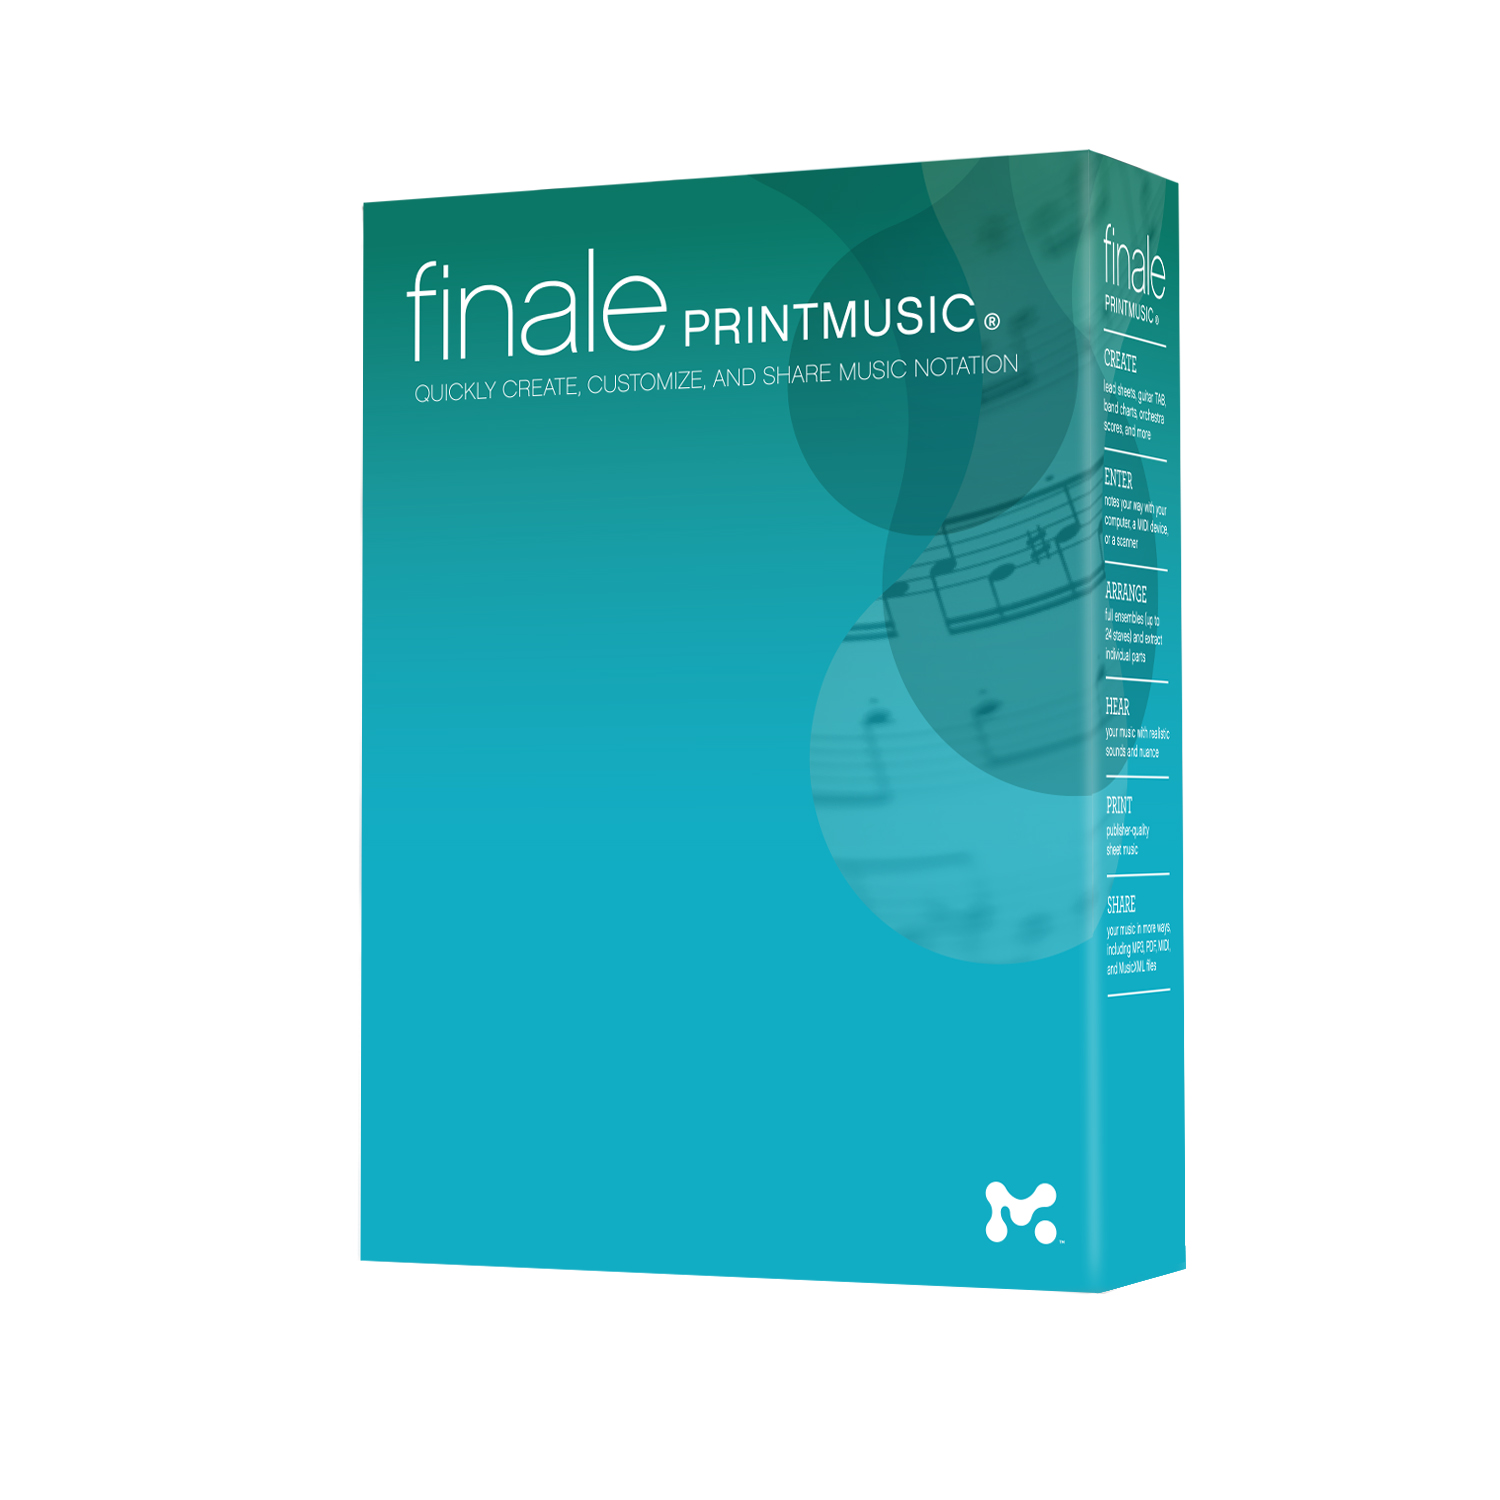 Finale Printmusic 2014 Update v. älteren Versionen